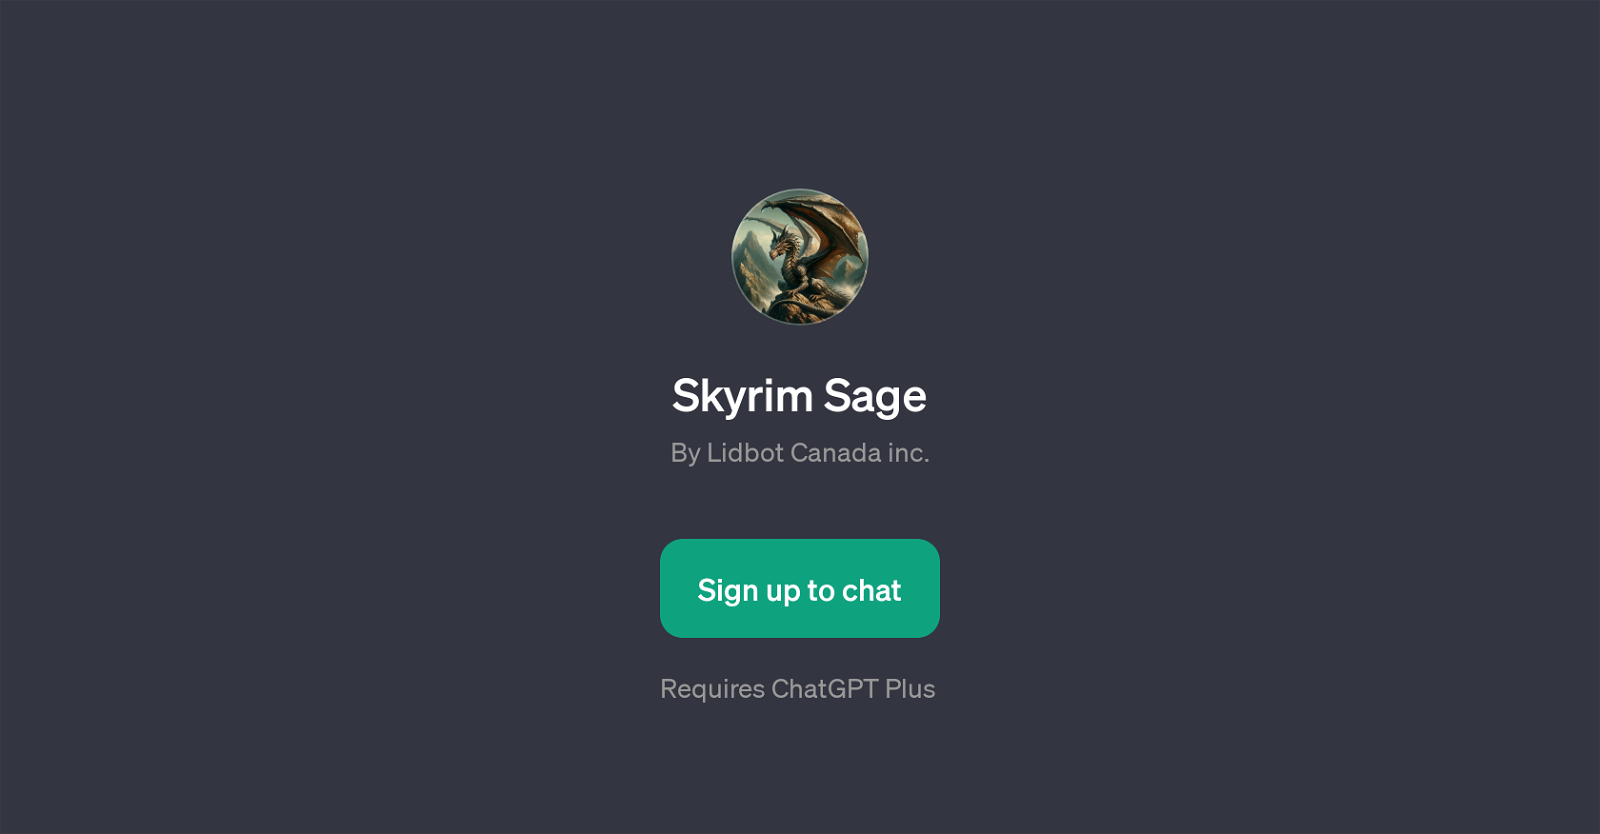 Skyrim Sage website